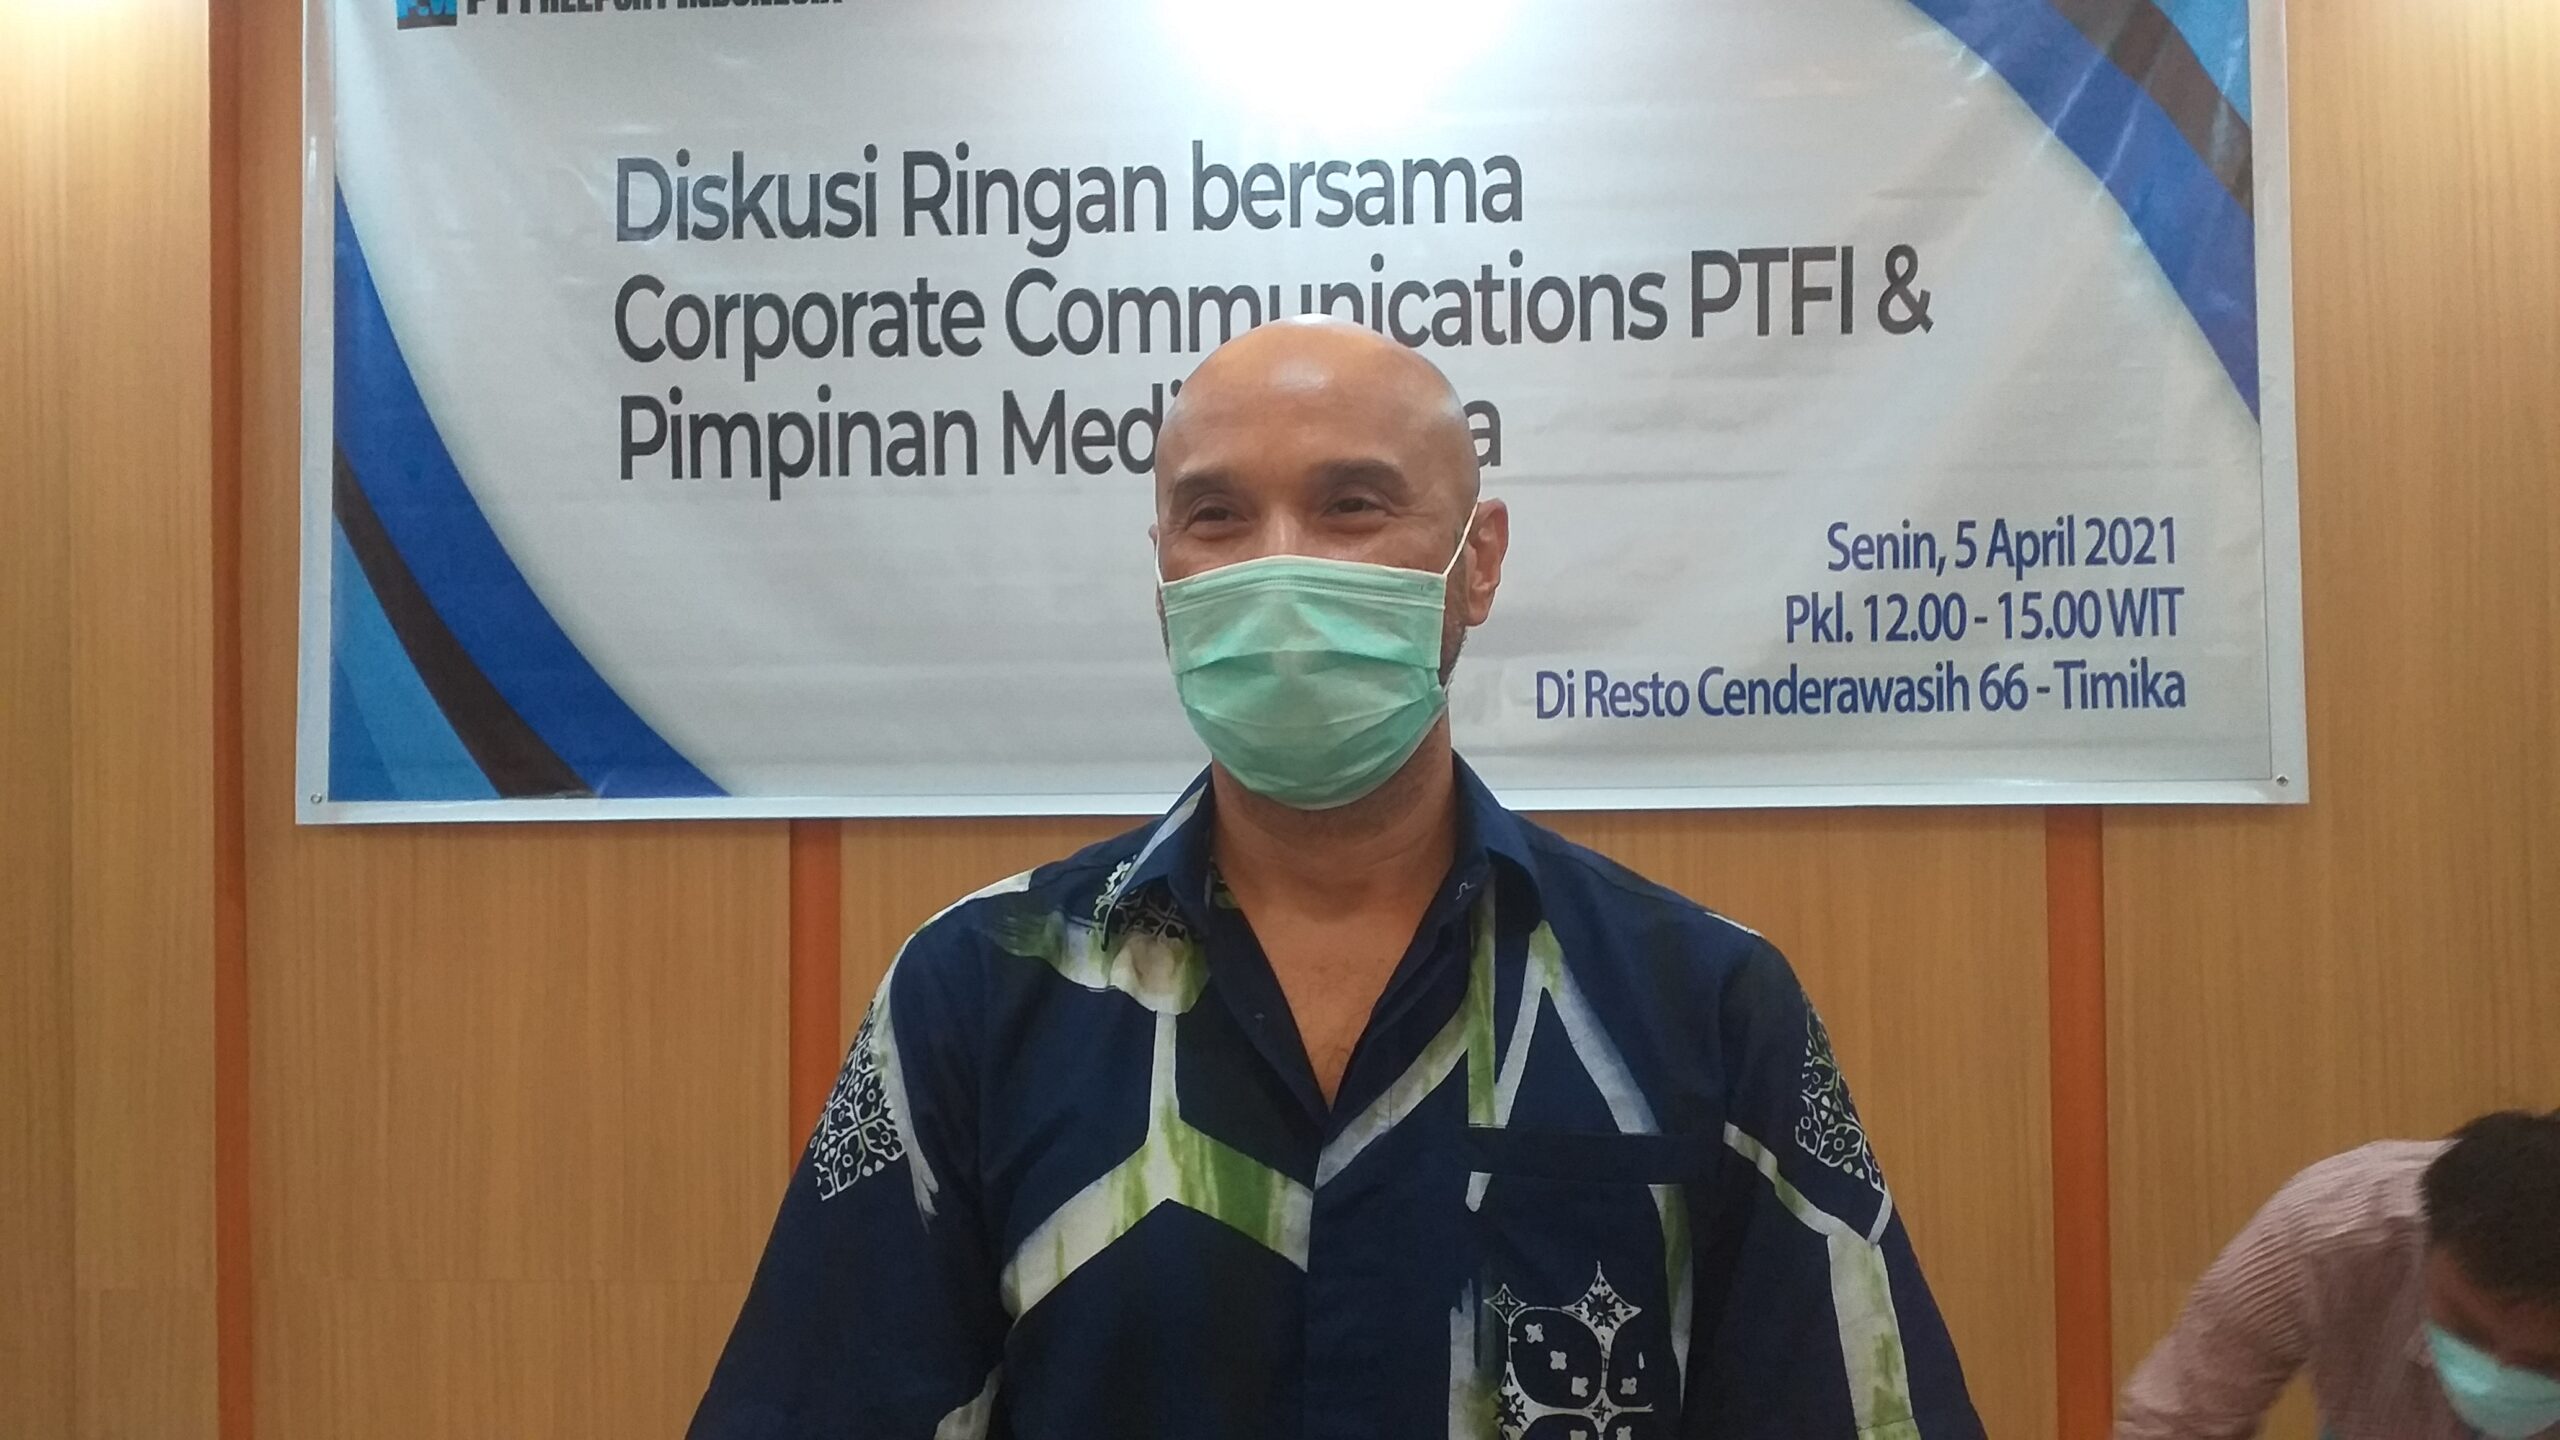 VP Corporate Communication PTFI, Riza Pratama